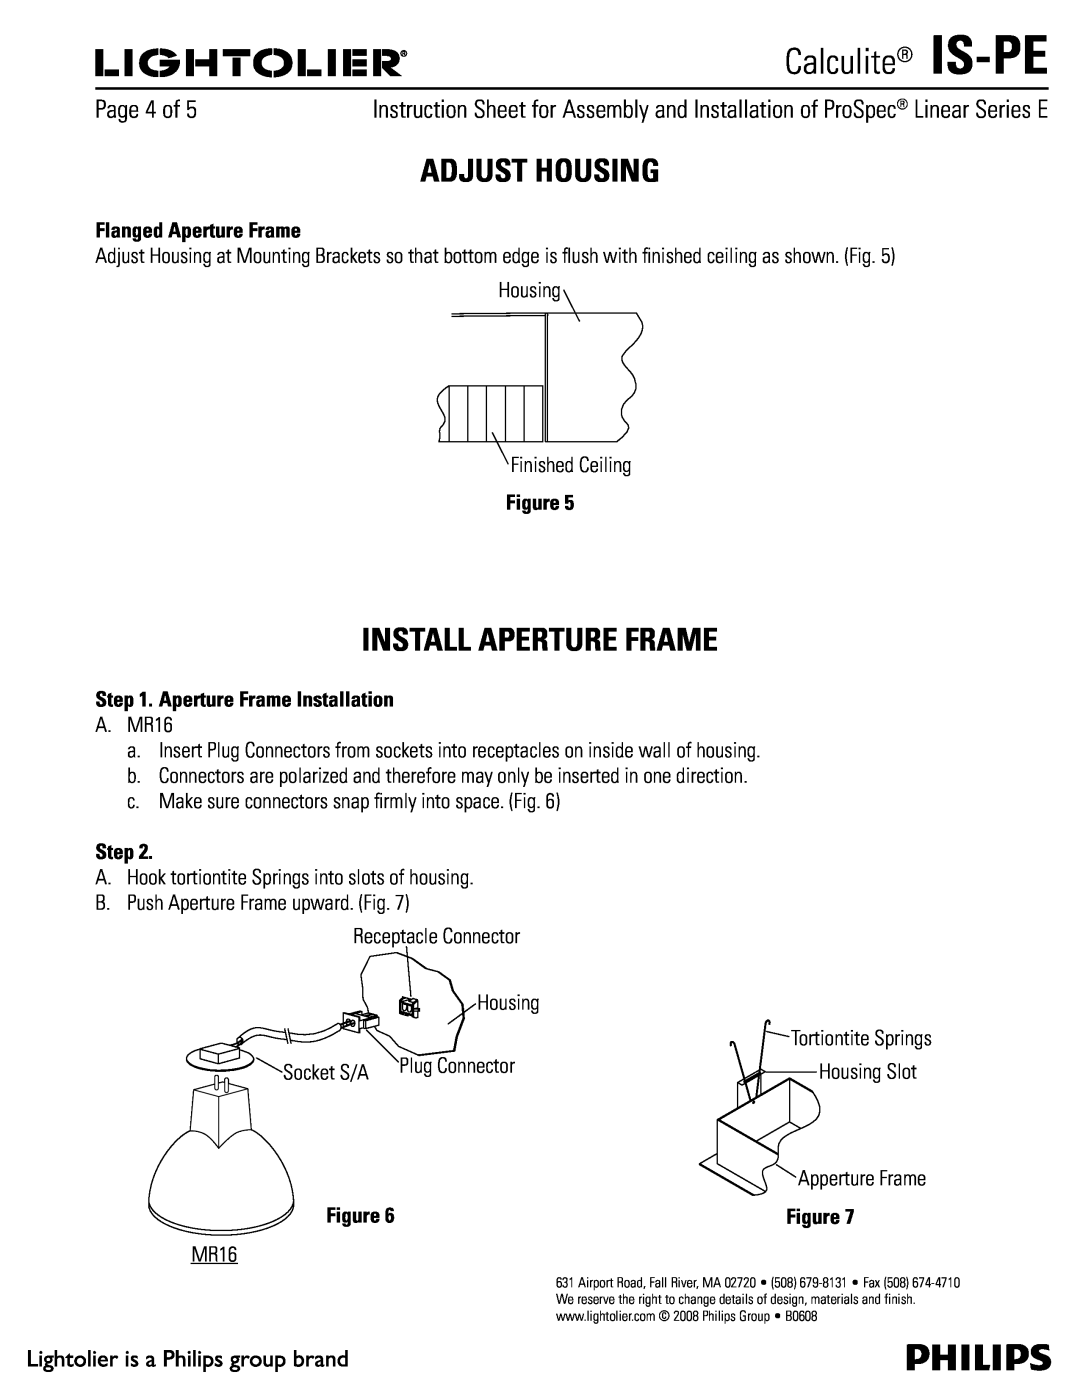 Lightolier IS-PE manual Adjust Housing, Install Aperture Frame, Flanged Aperture Frame, Aperture Frame Installation, Step 